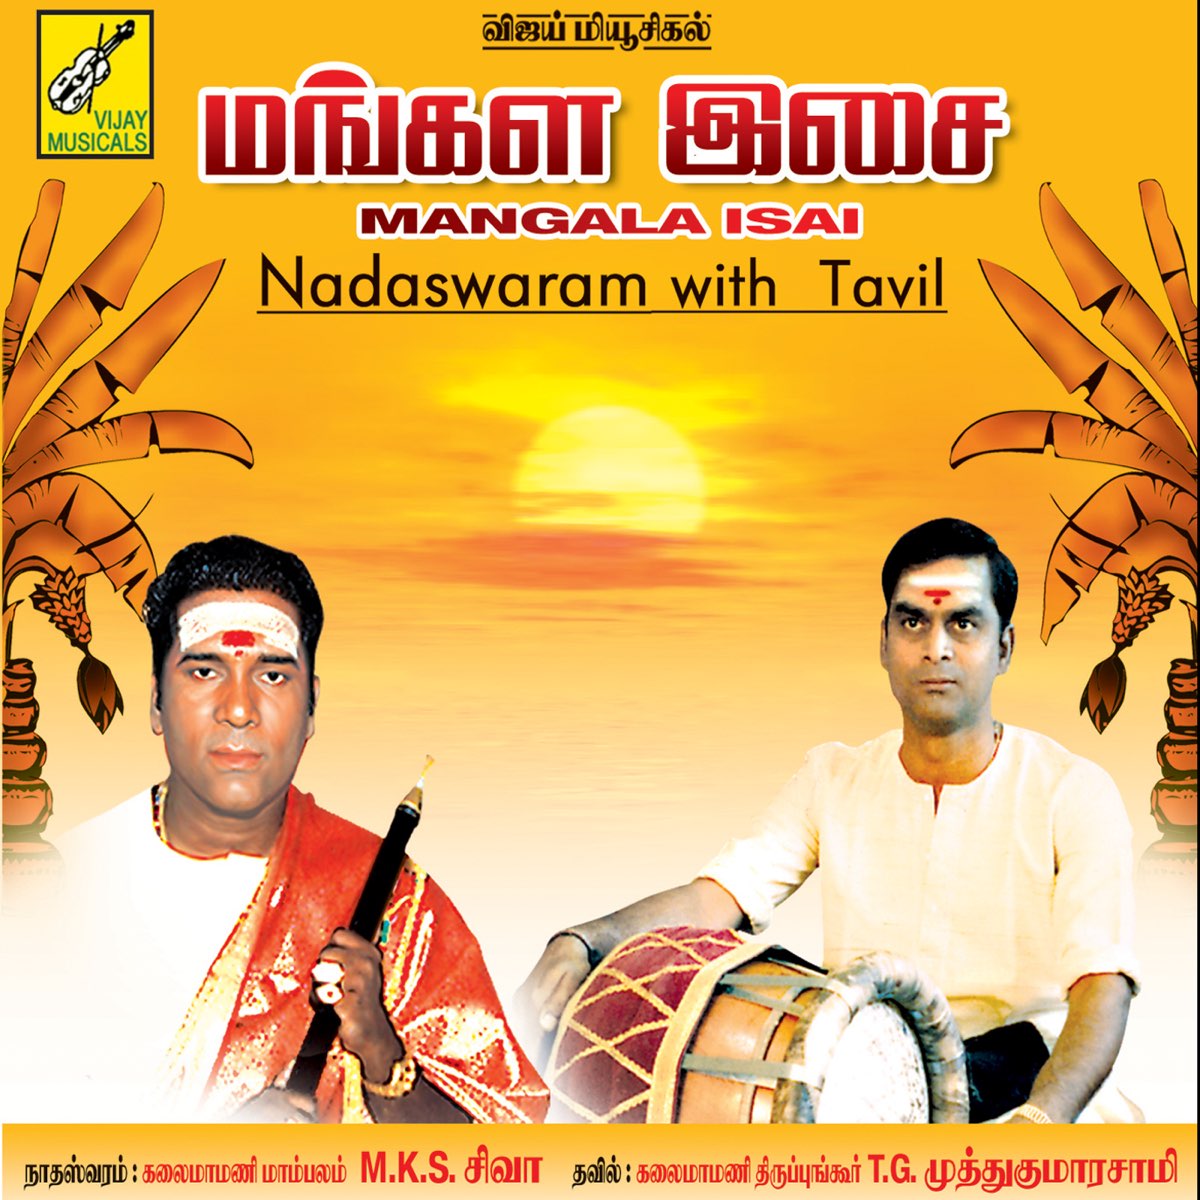 Mangala Isai - Nadaswaram With Tavil by Mambalam M.K.S. Siva & T.G.  Muthukkumarasami on Apple Music